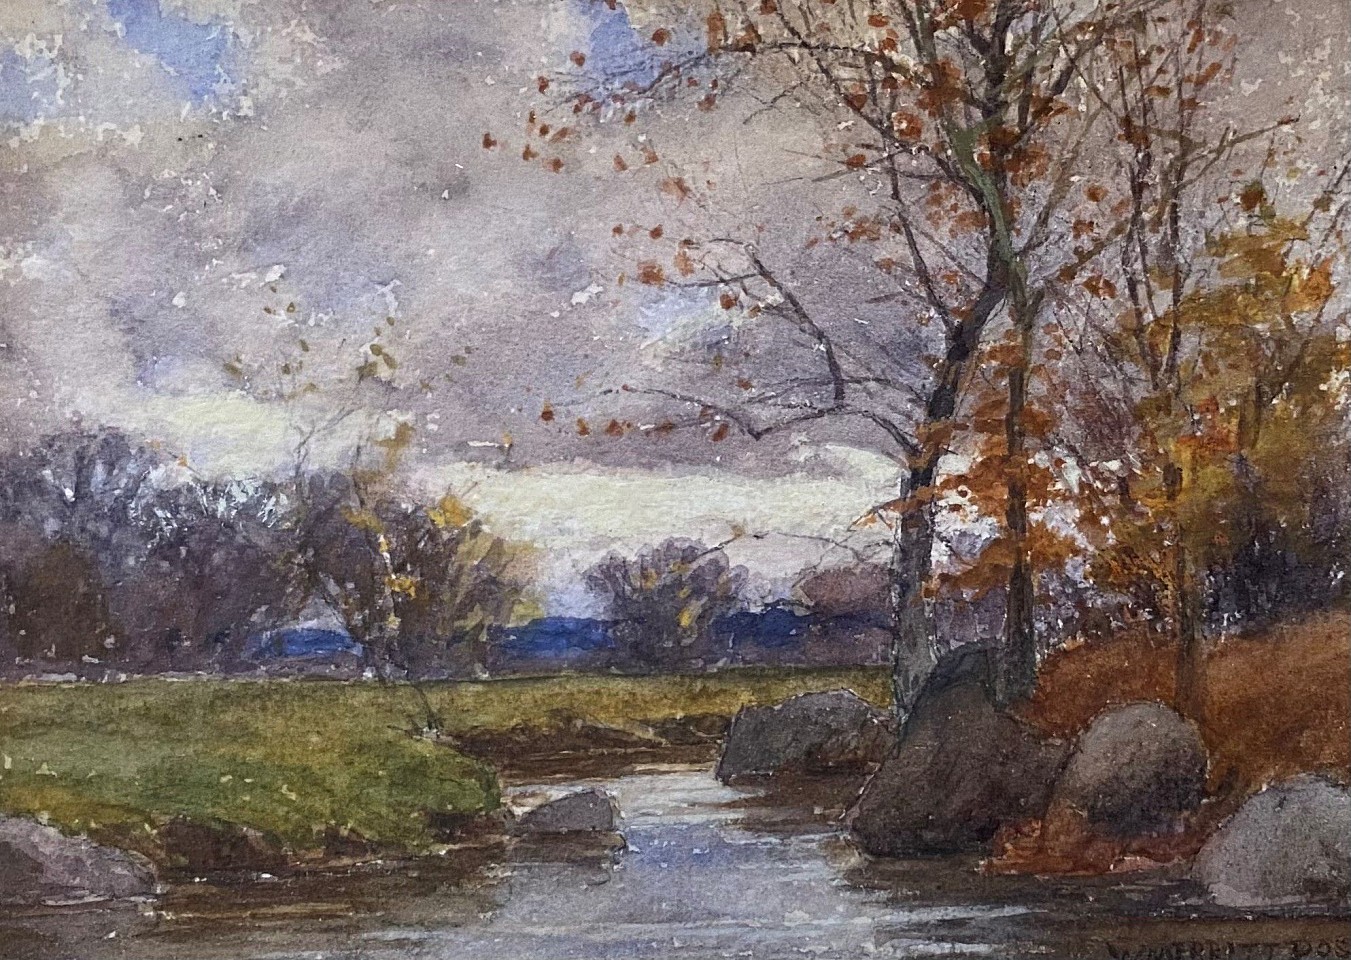 William Merritt Post, The Stream in Autumn
watercolor on paper, 5 1/4"" x 7 1/4""
EWP322.06
$950